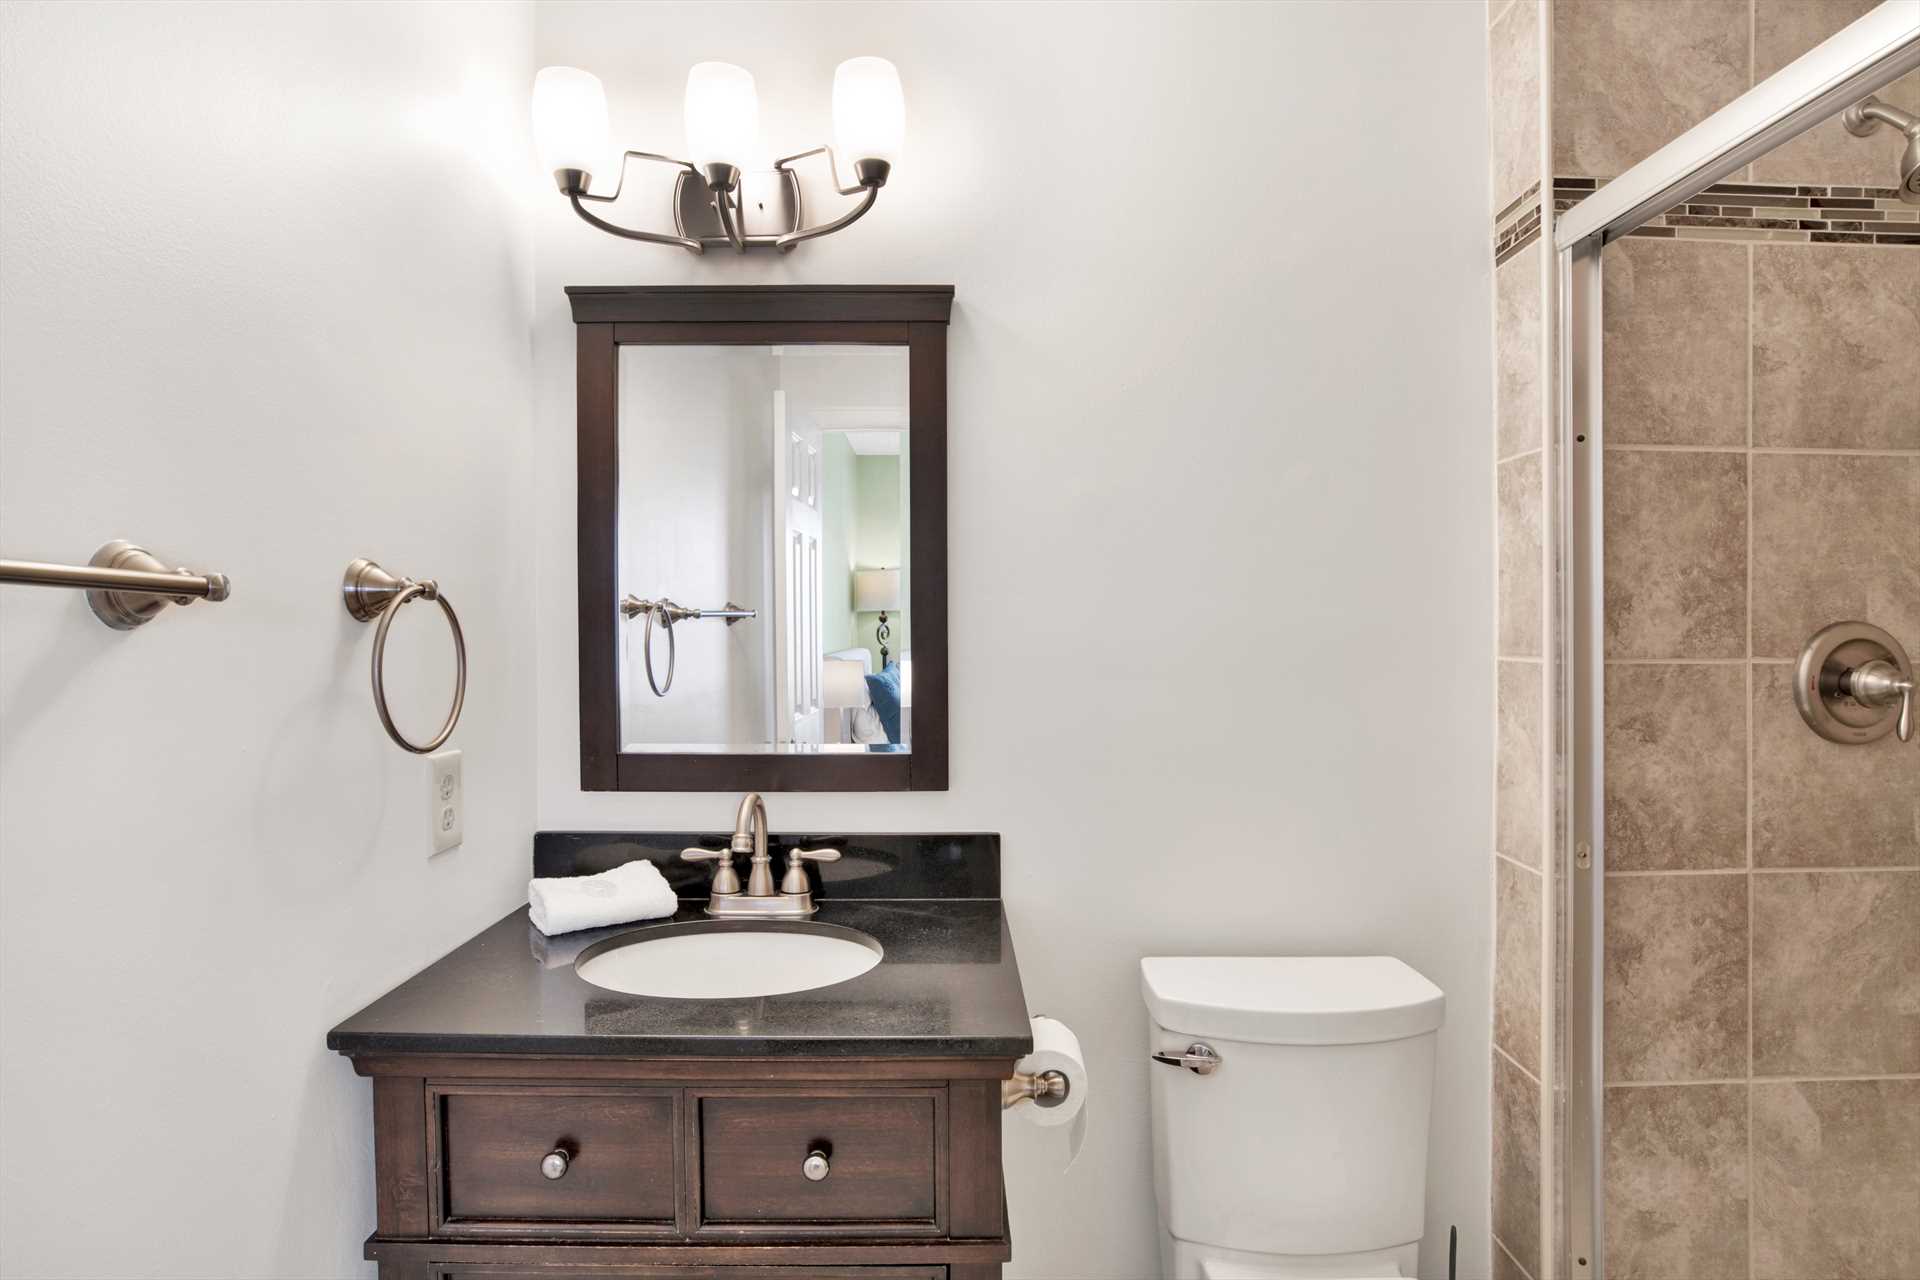 Renovated bathroom with updated plumbing and vanity.